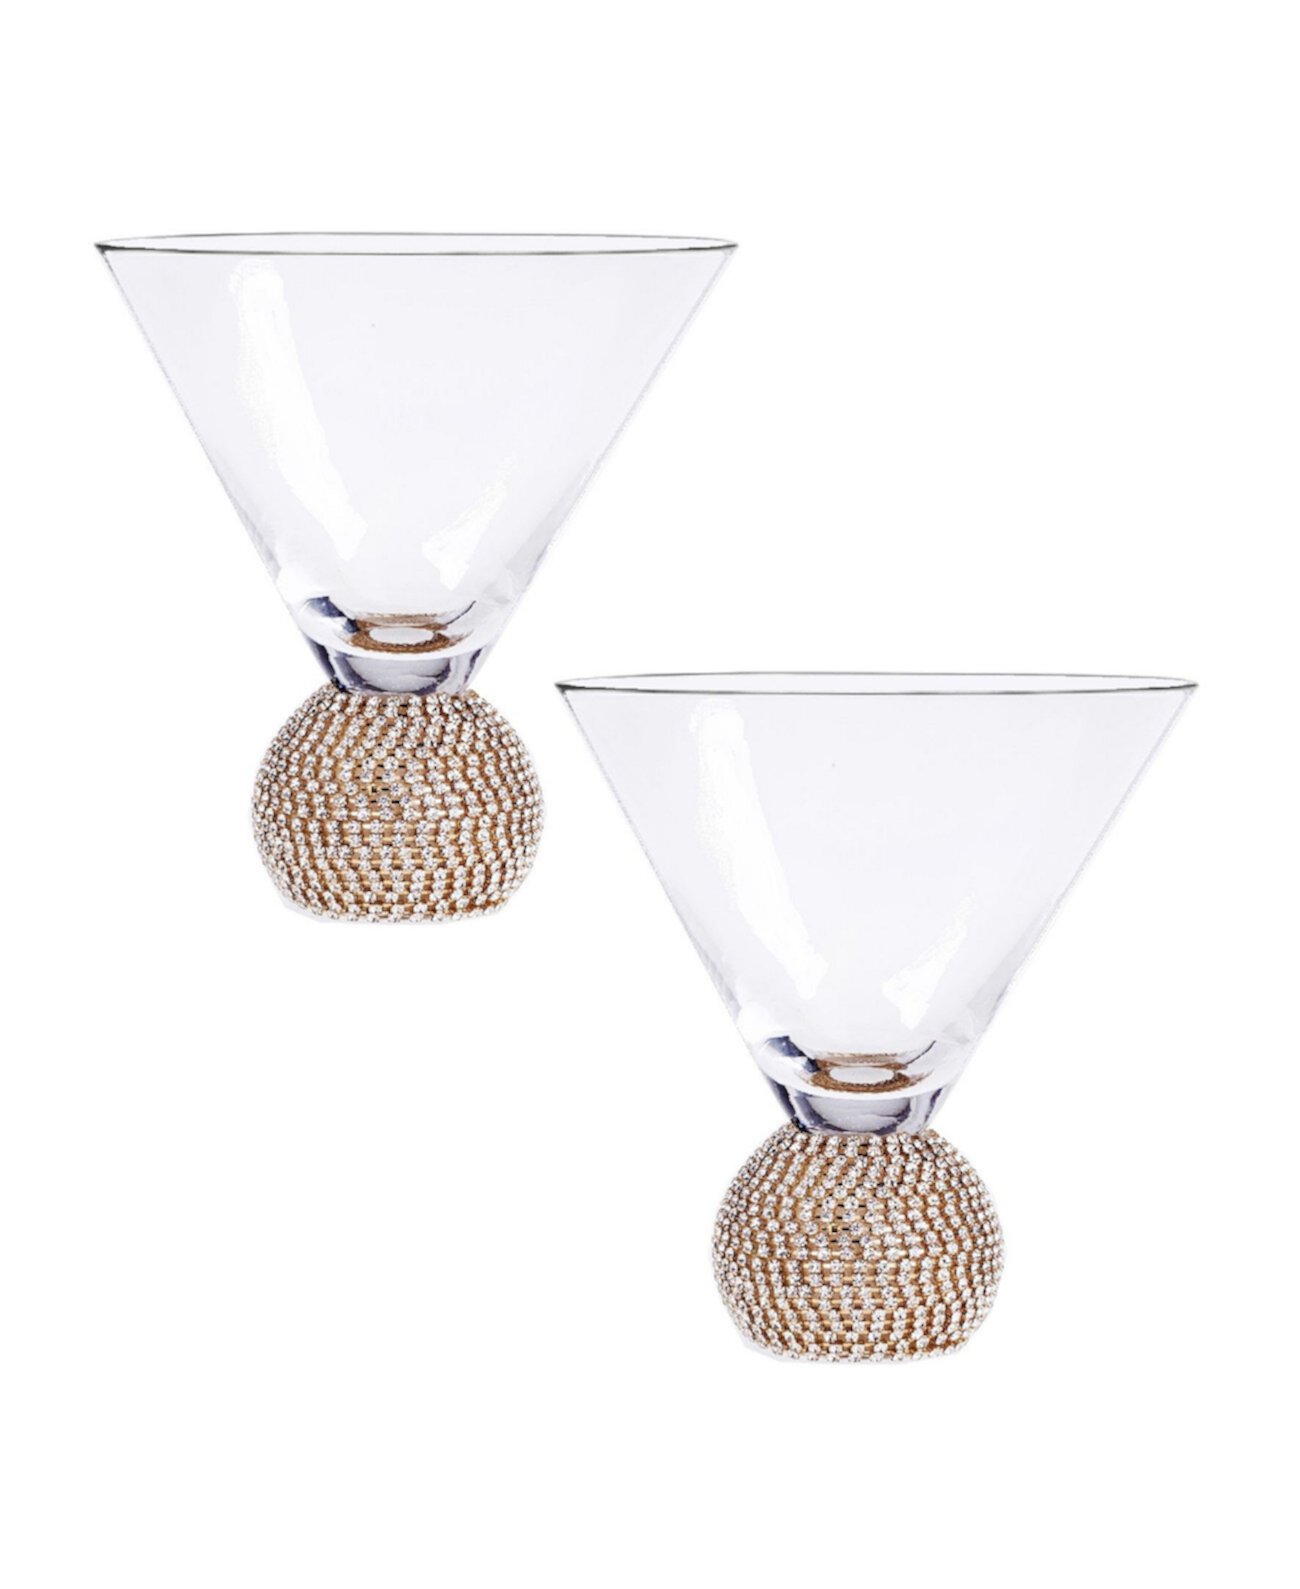 Посуда для бара Bling Martini, набор из 2 шт. Qualia Glass